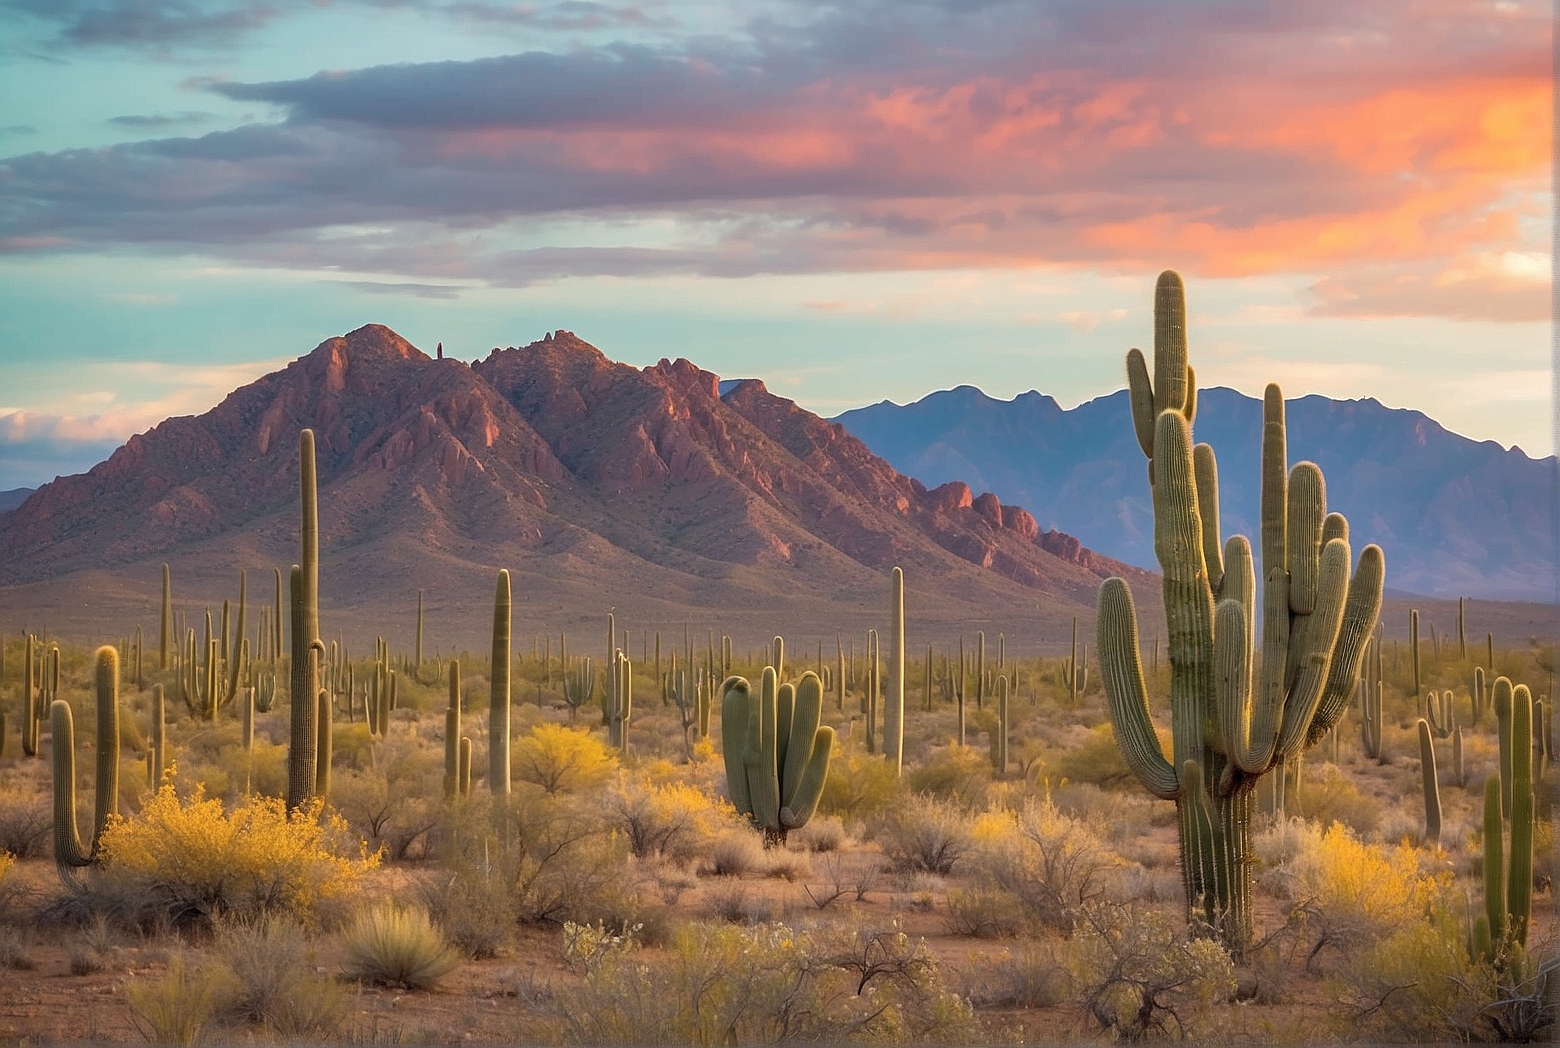 Where to Find Saguaro Cactus